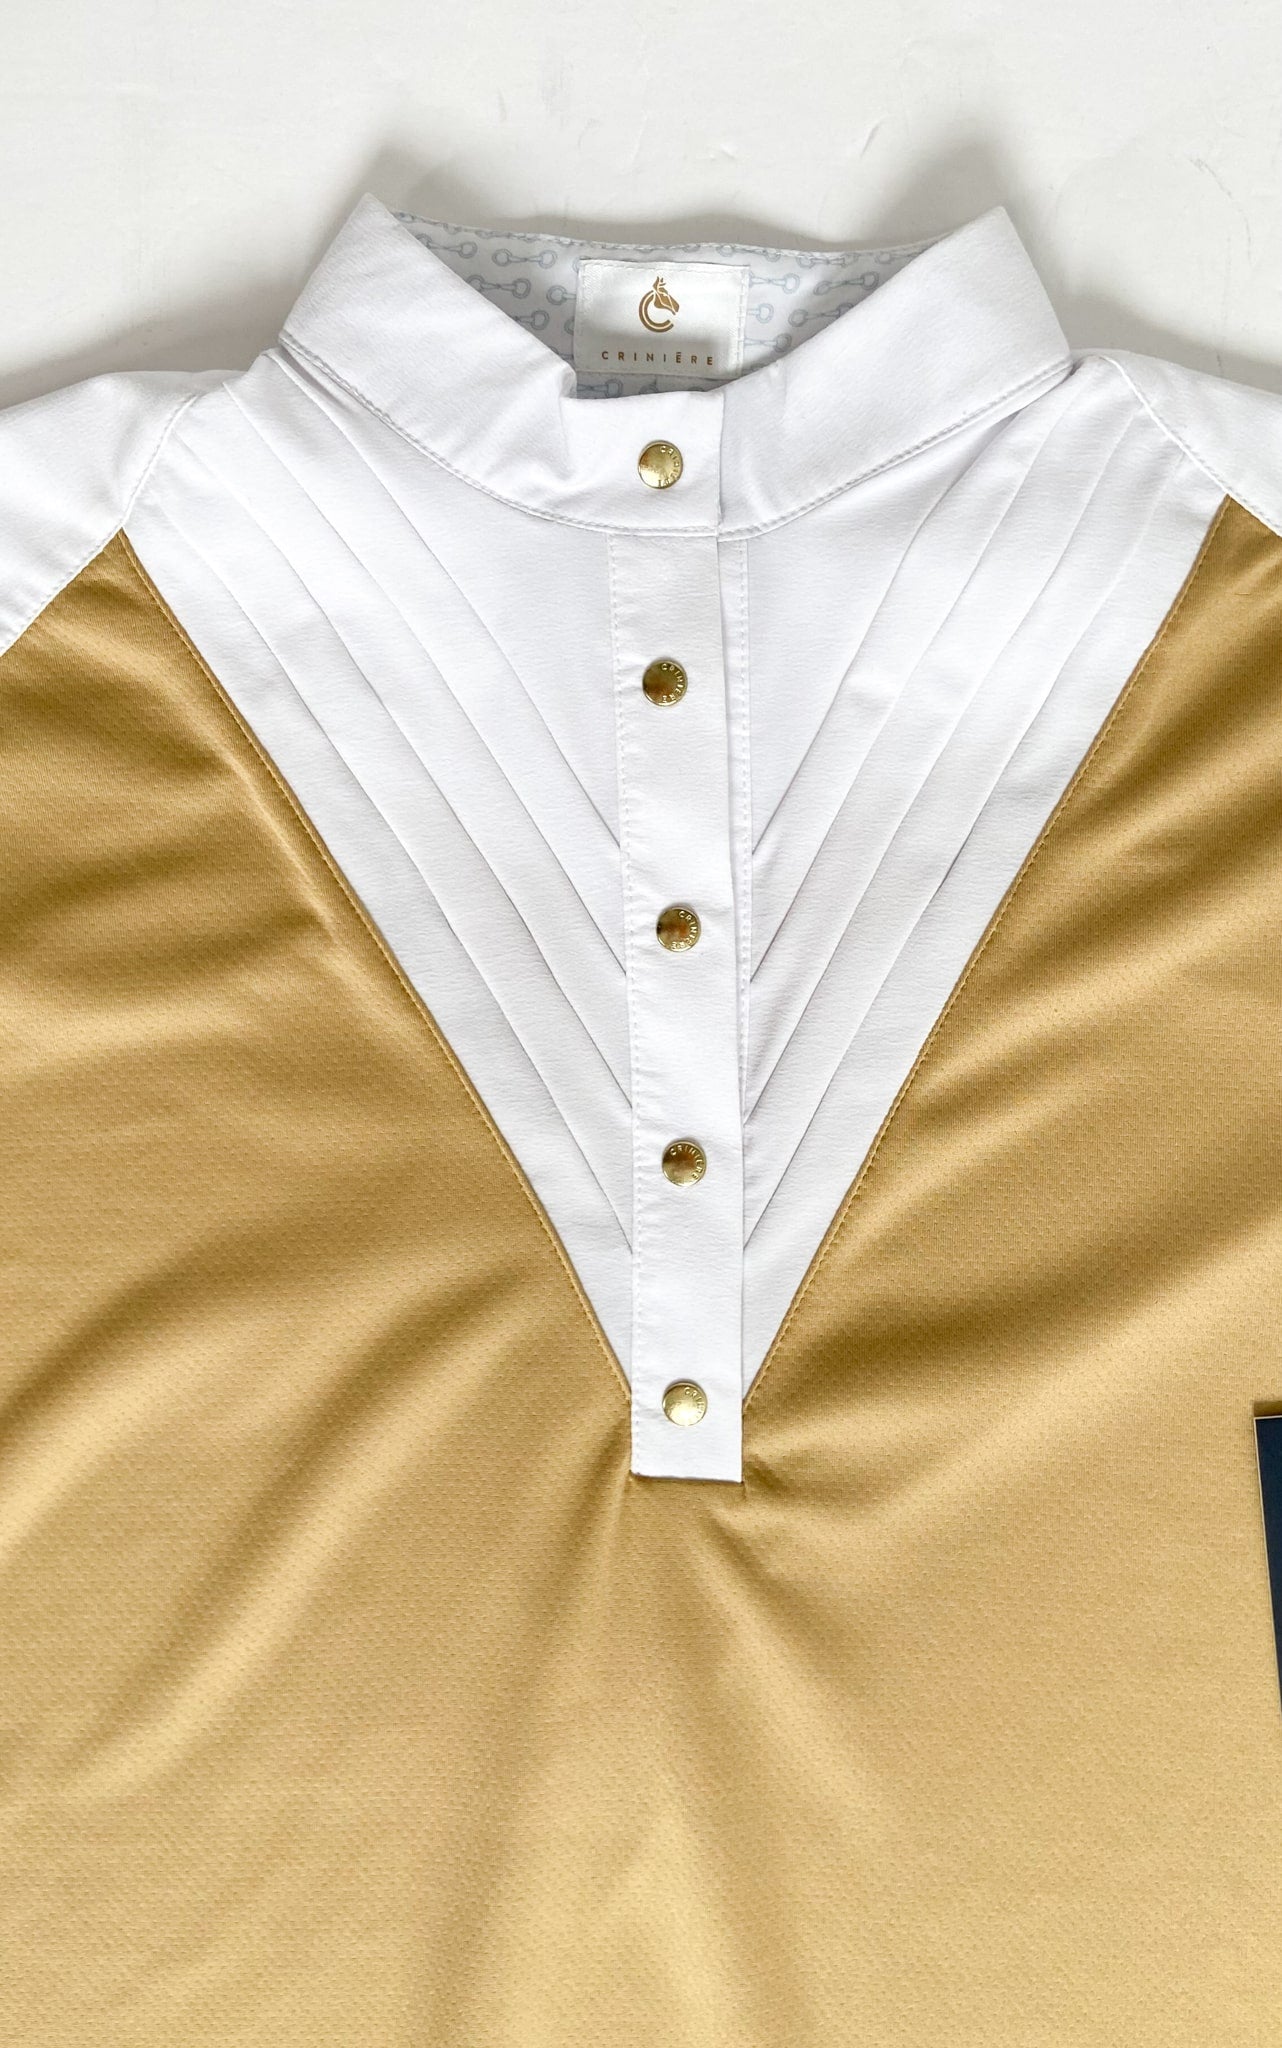 Criniere Margot Show Shirt - Dust Gold - Medium